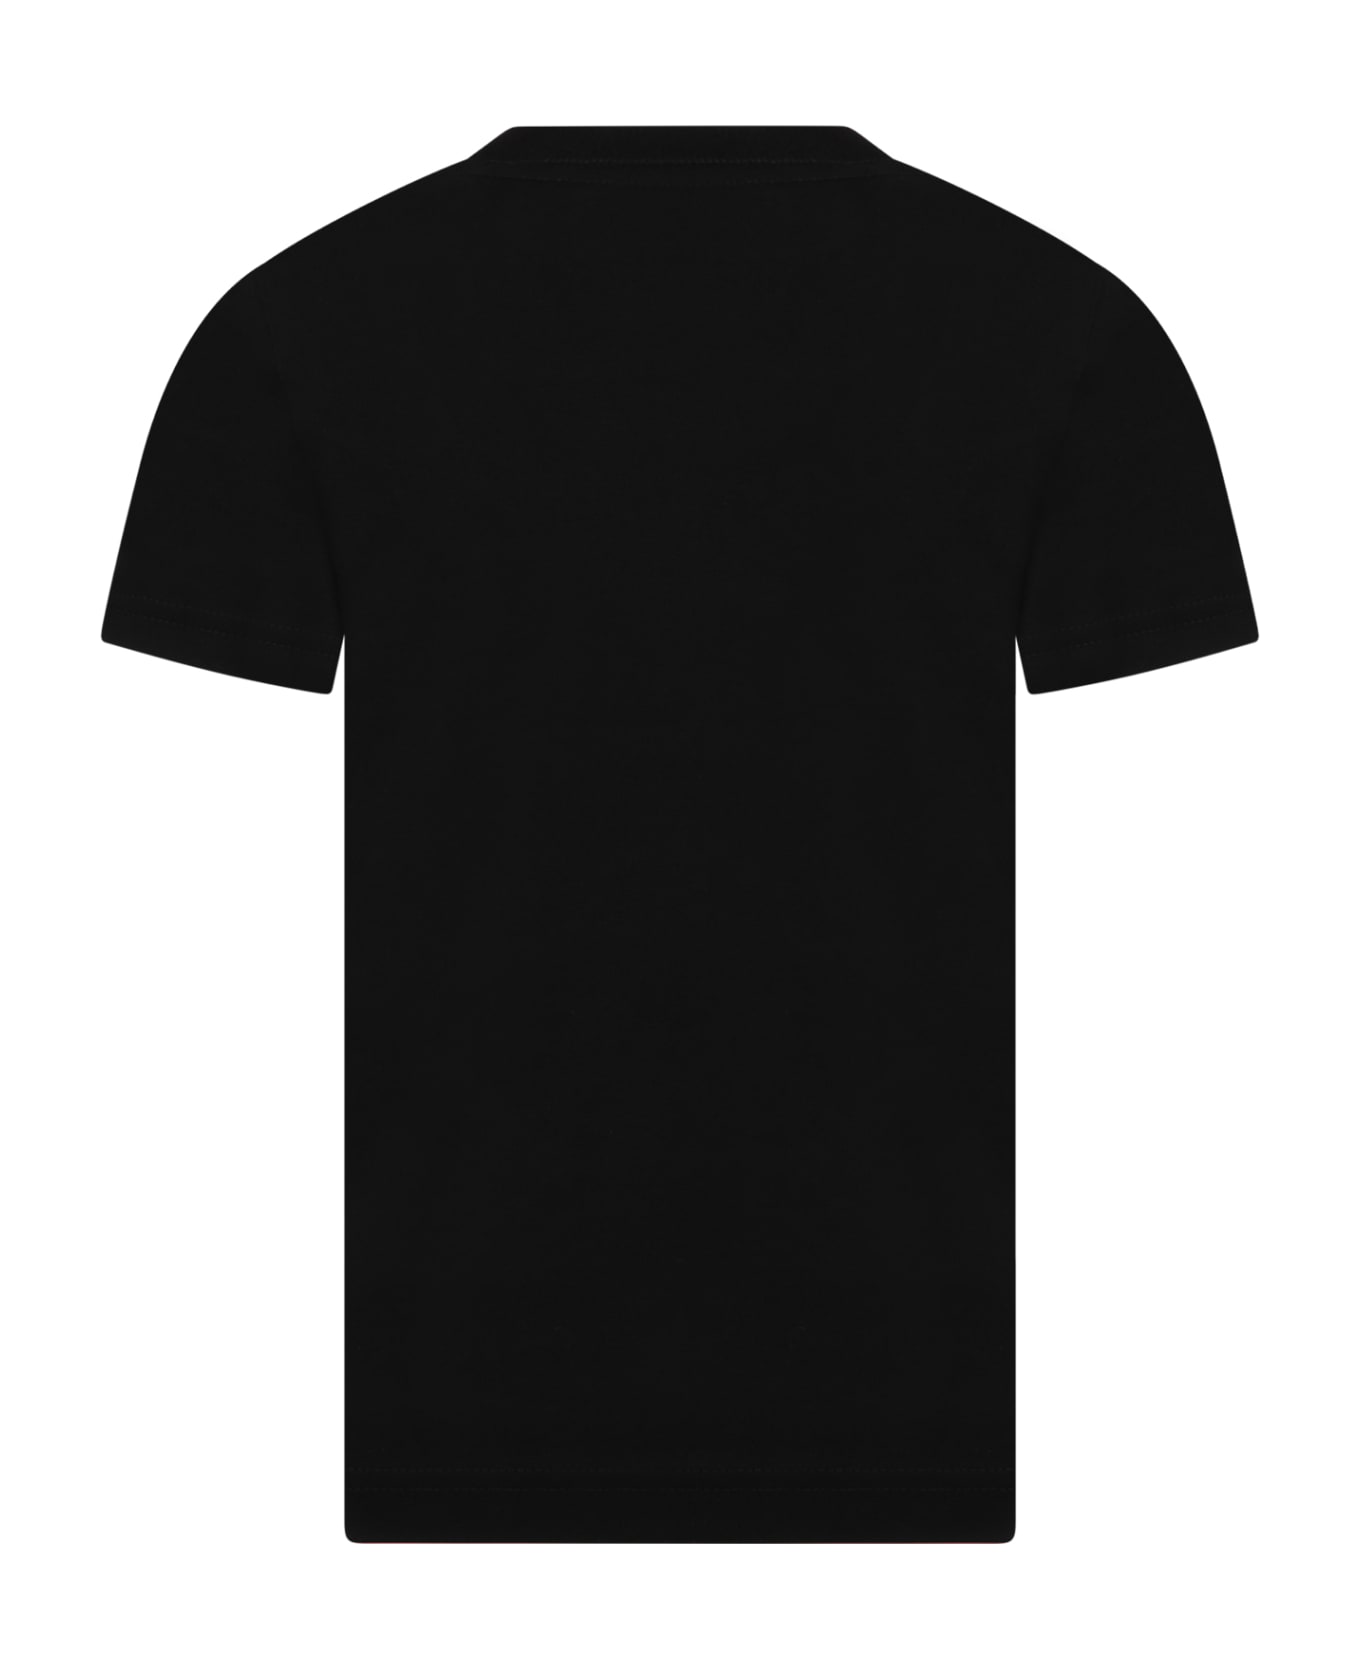 Nike Black T-shirt For Kids With Logo - Black